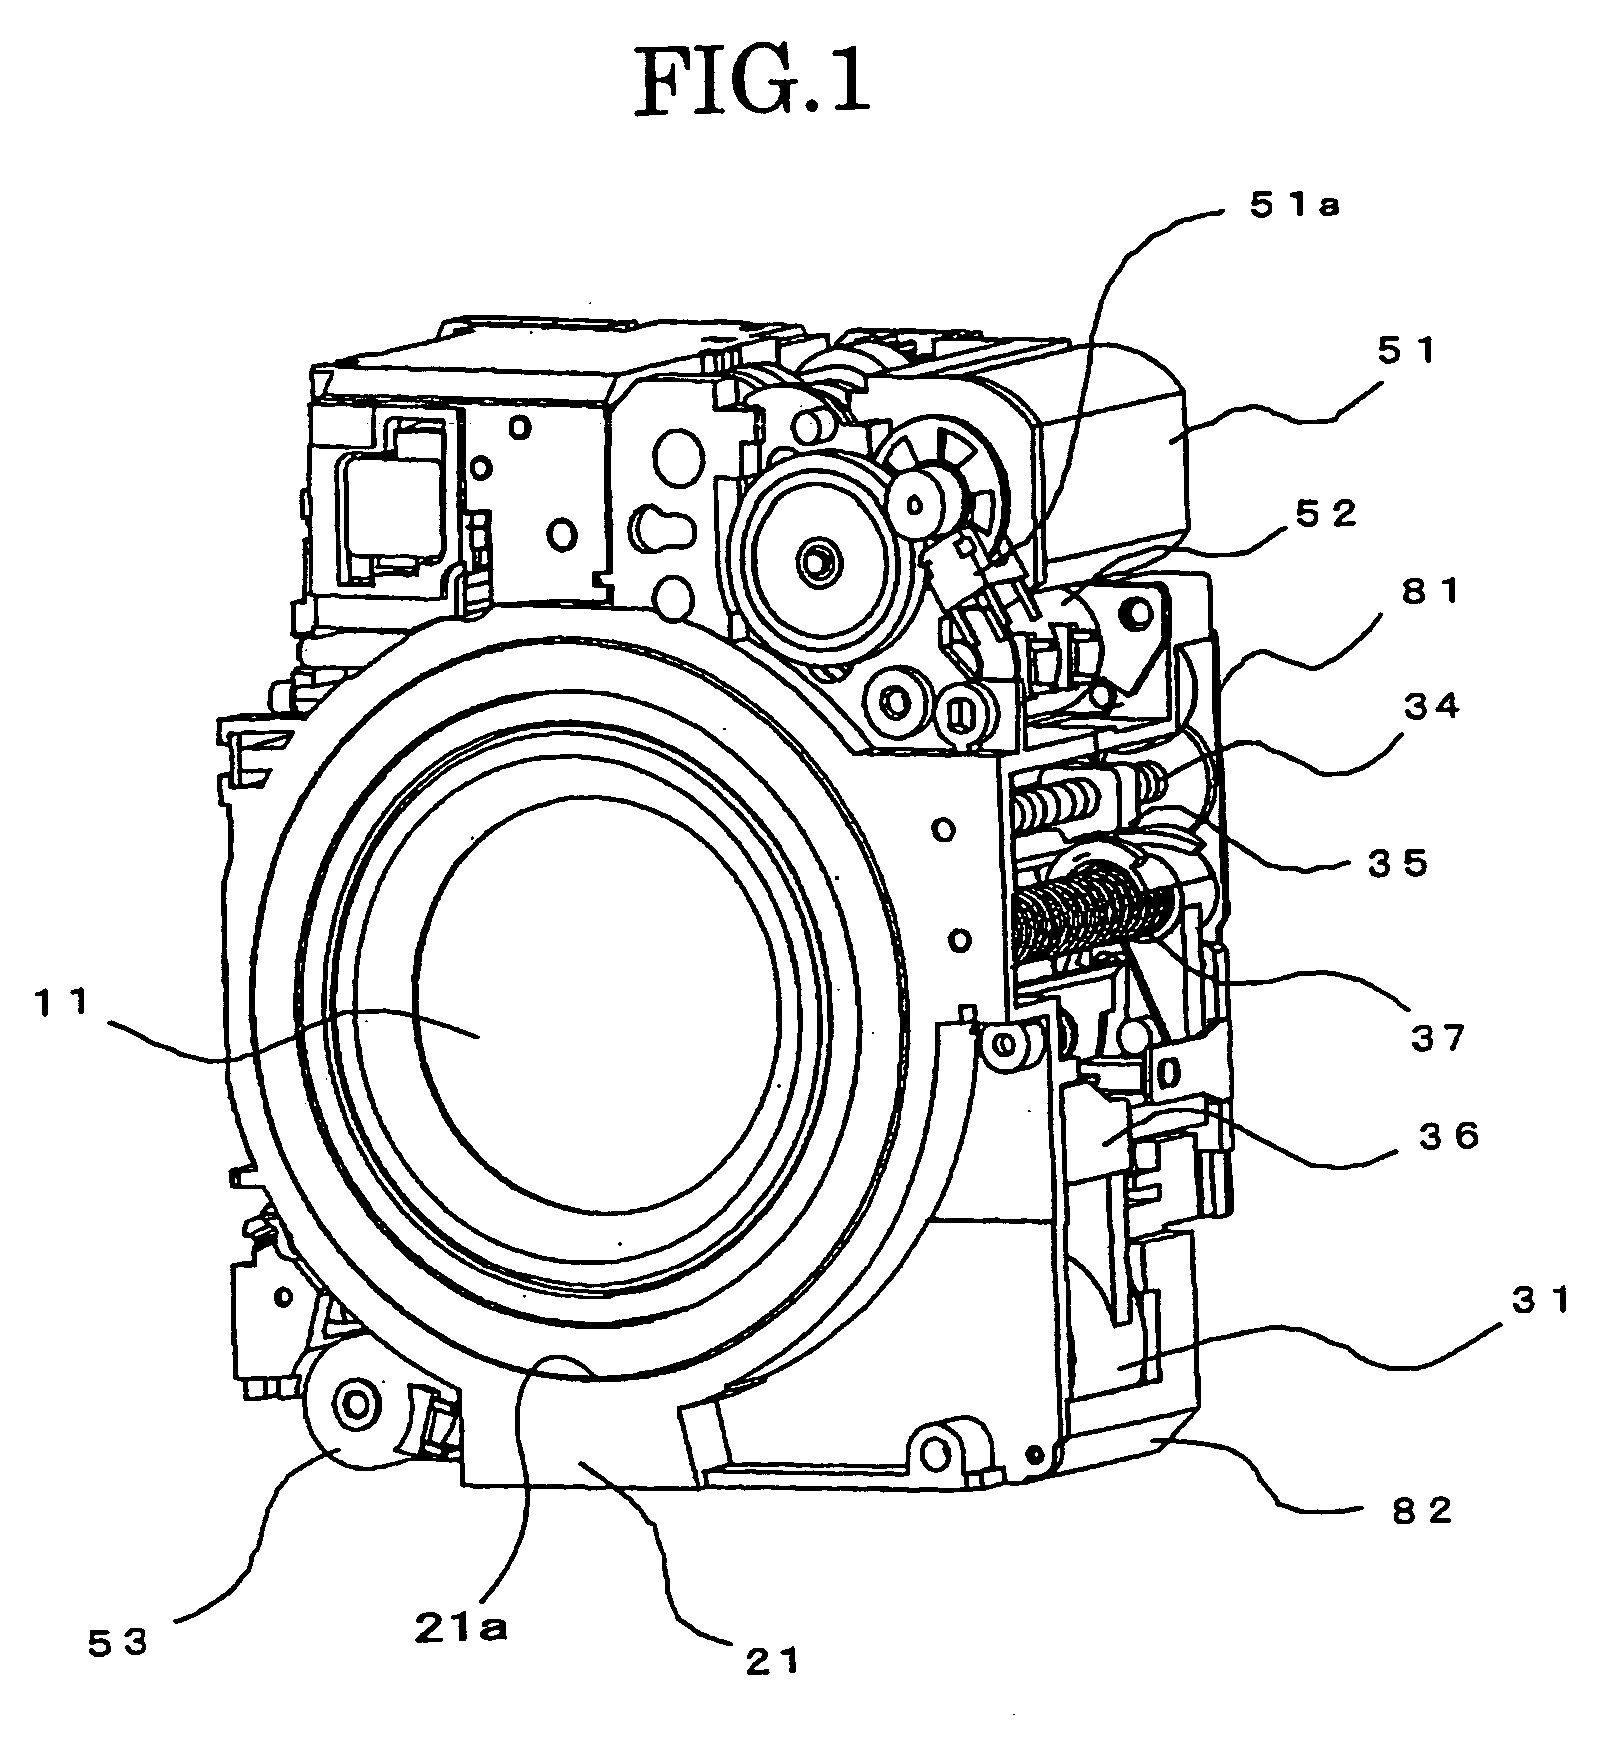 Lens barrel, camera, and mobile information terminal